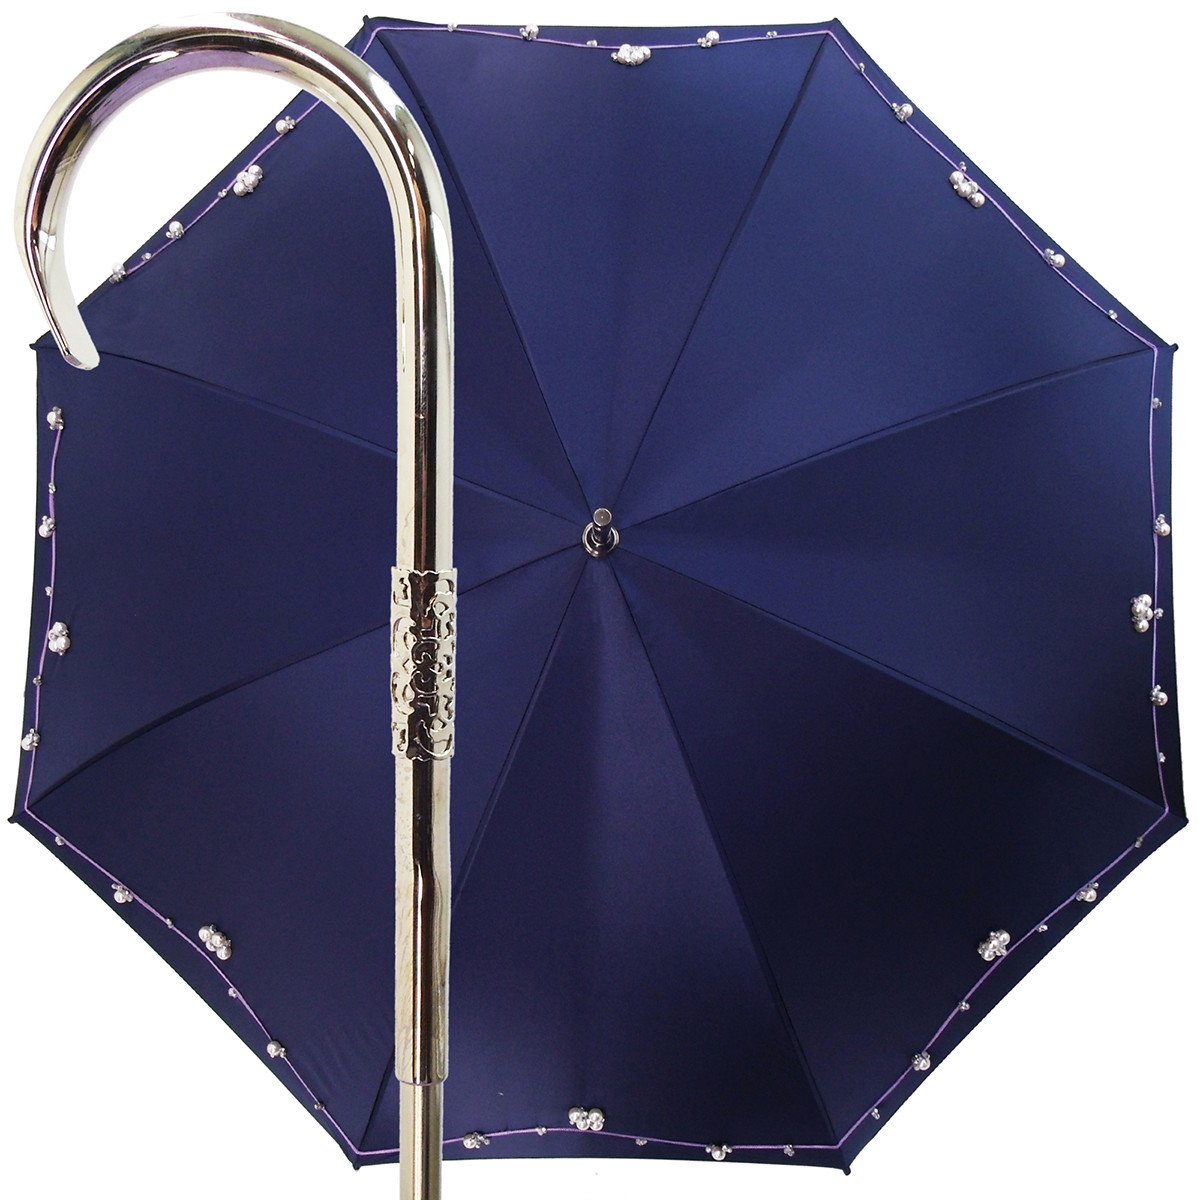 Handmade Luxury Jewel Pearl Women's Fashion Umbrella - il-marchesato